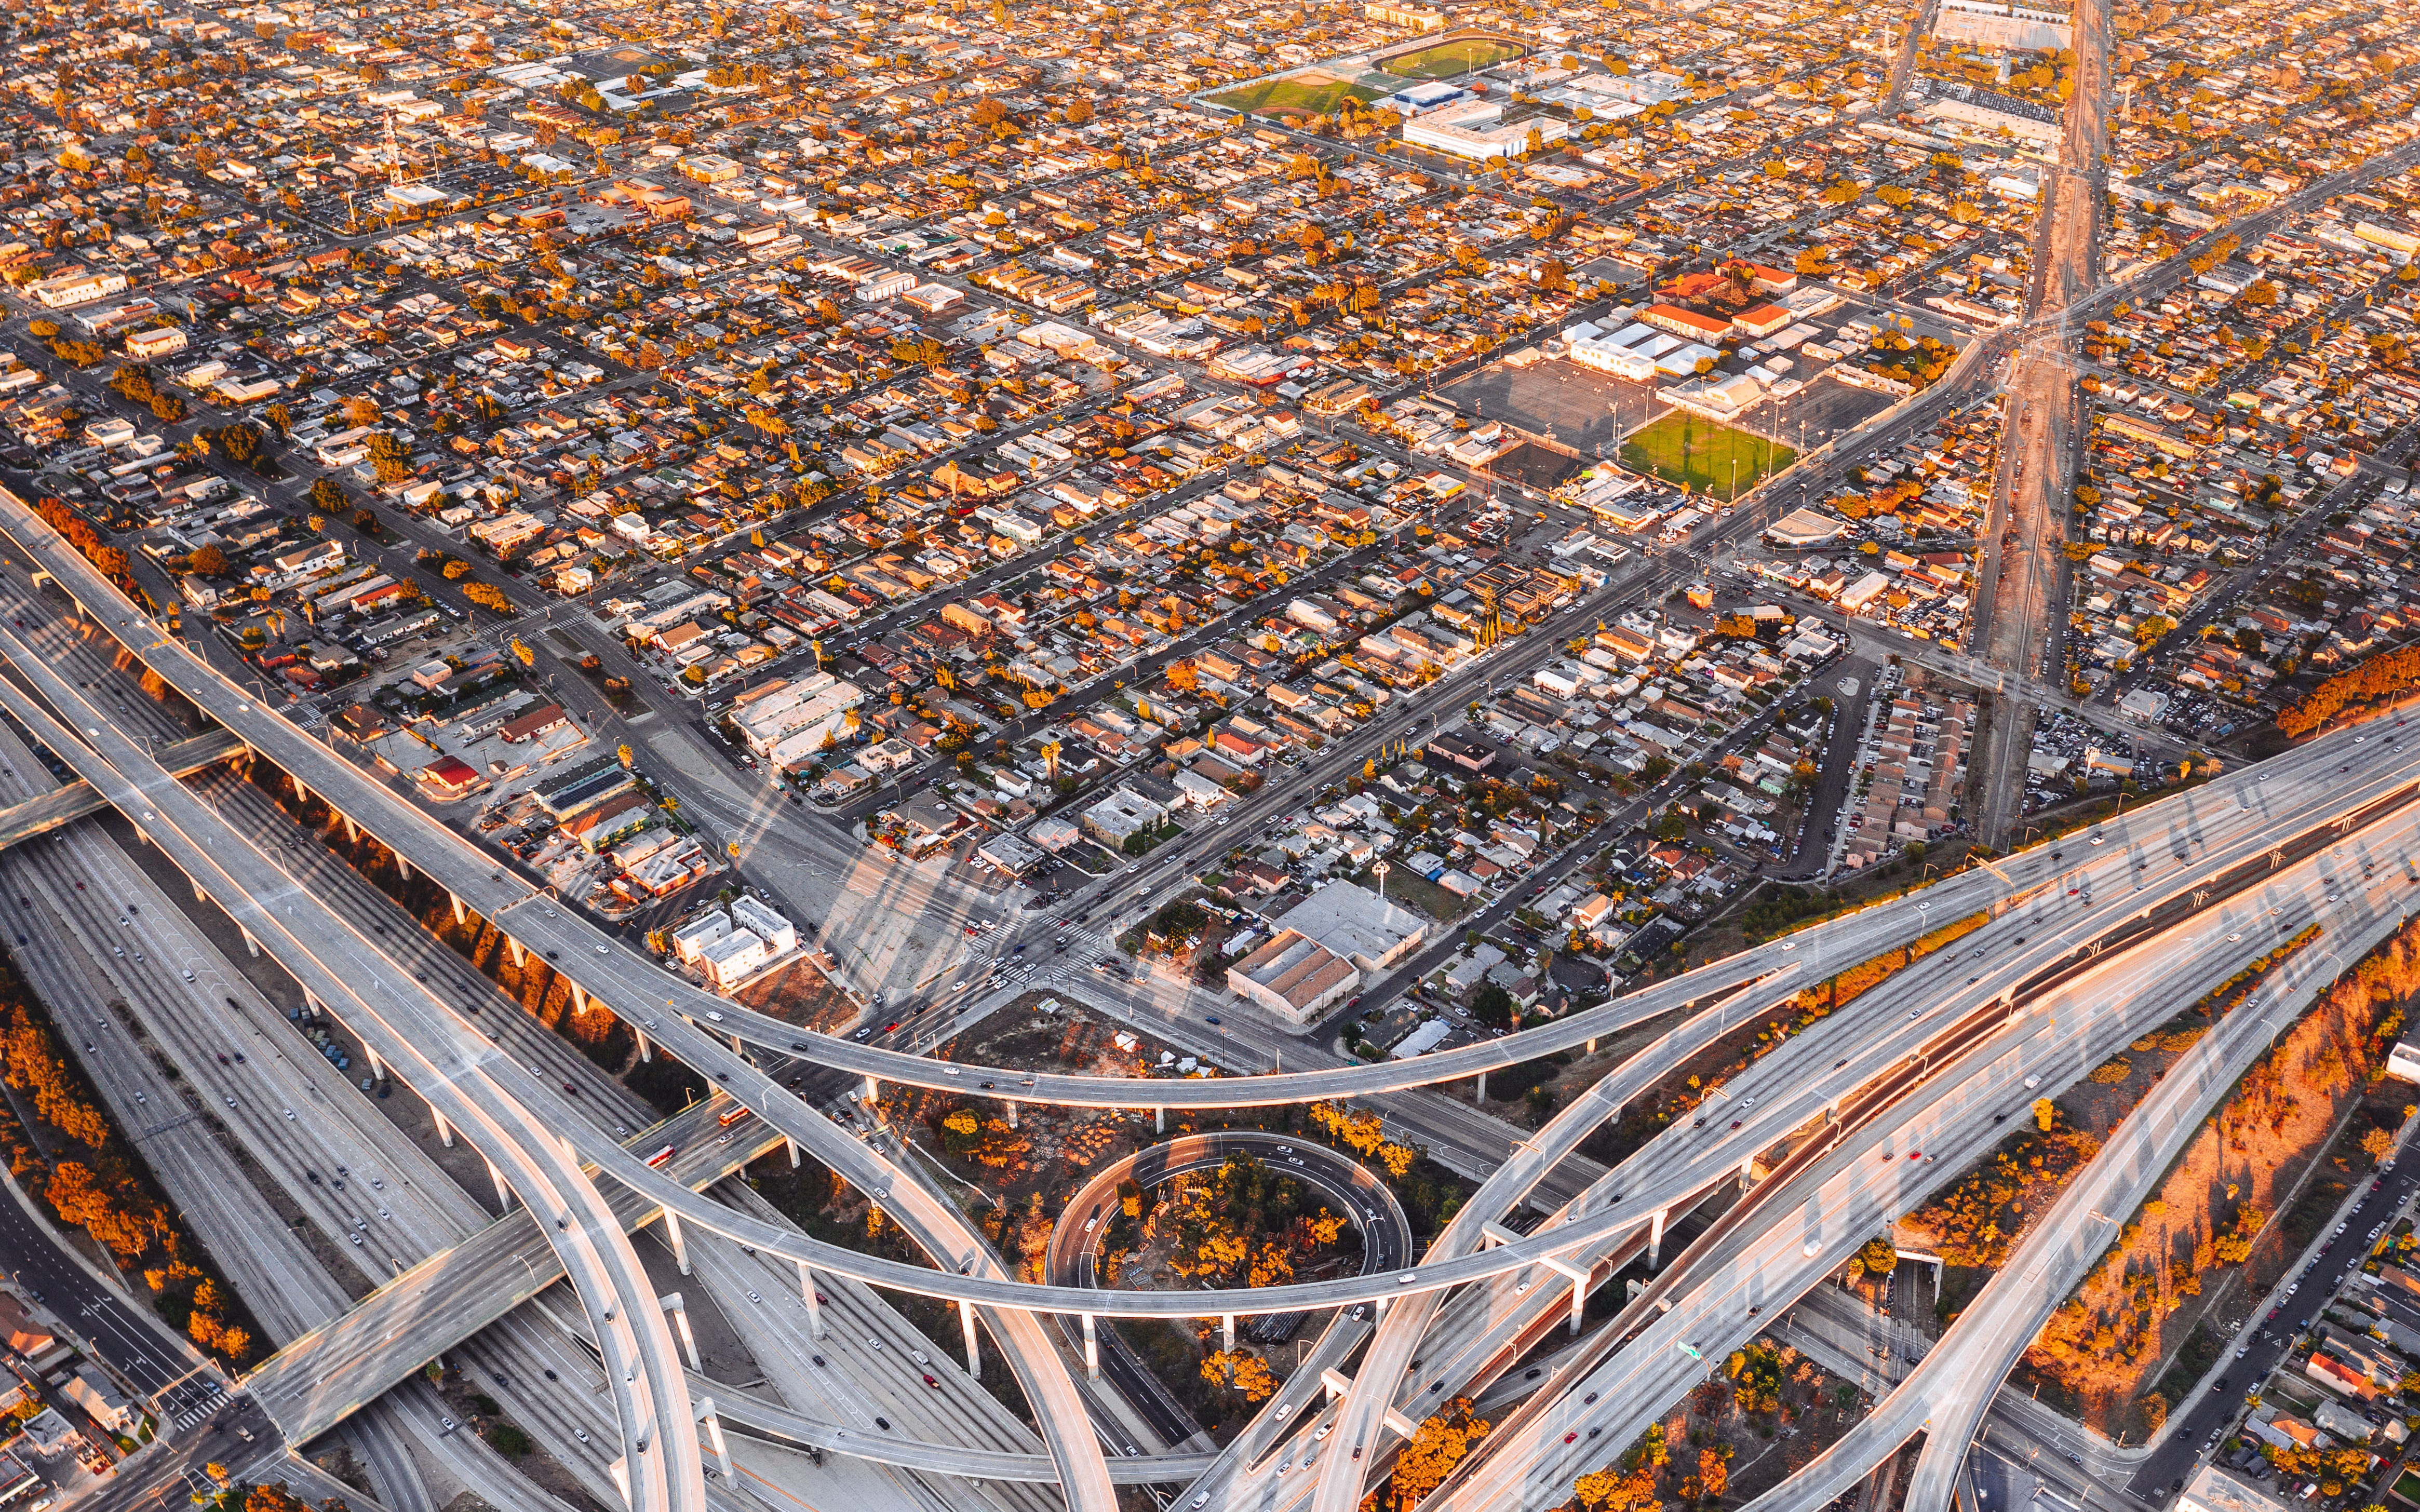 Highway interchange in Los Angeles with view of residential neighborhood.